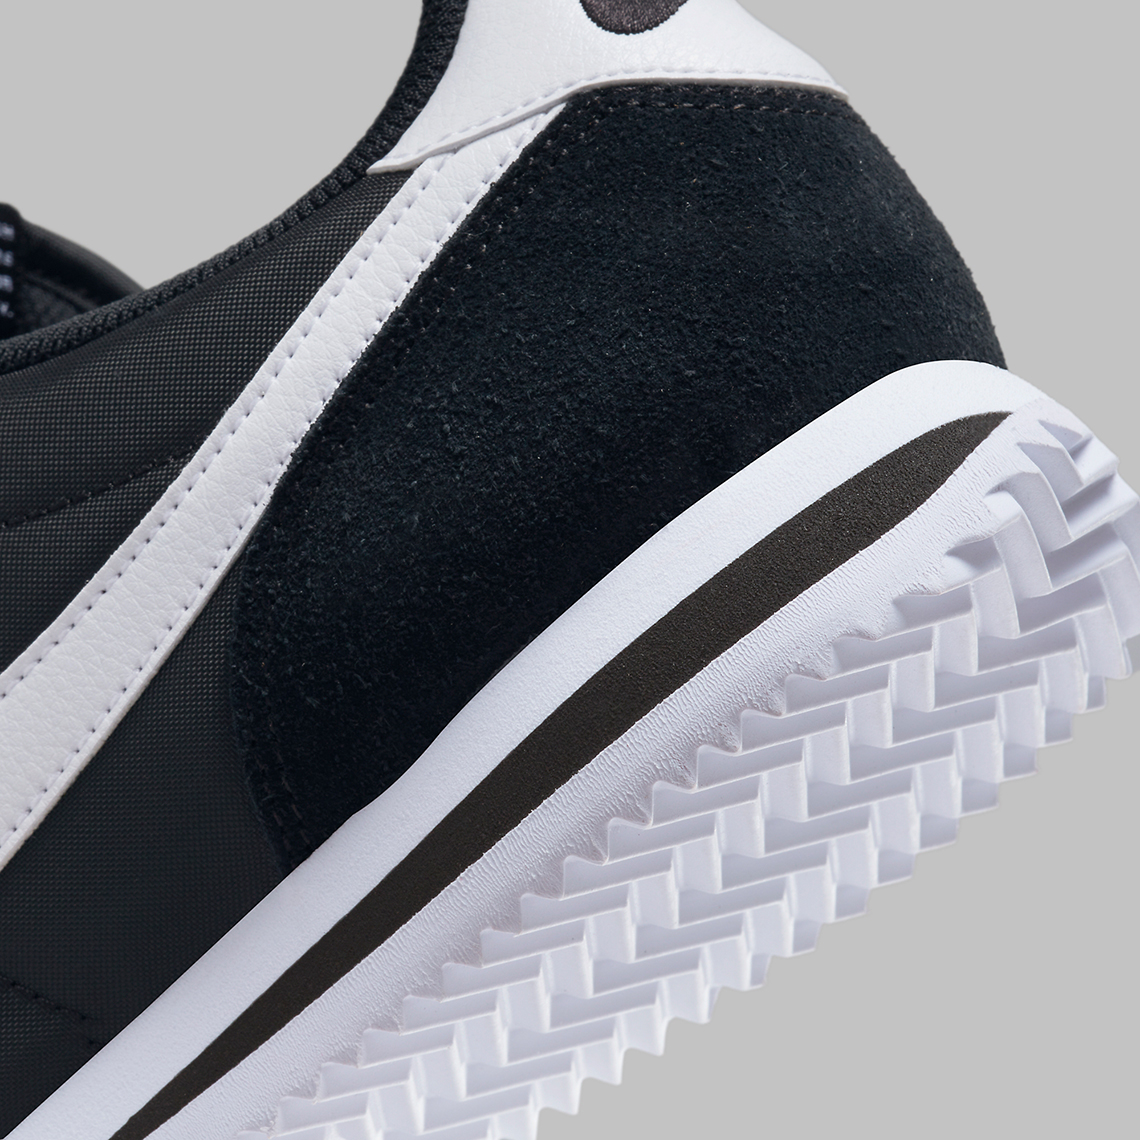 Nike Cortez Womens Black White Dz2795 001 Release Date 7